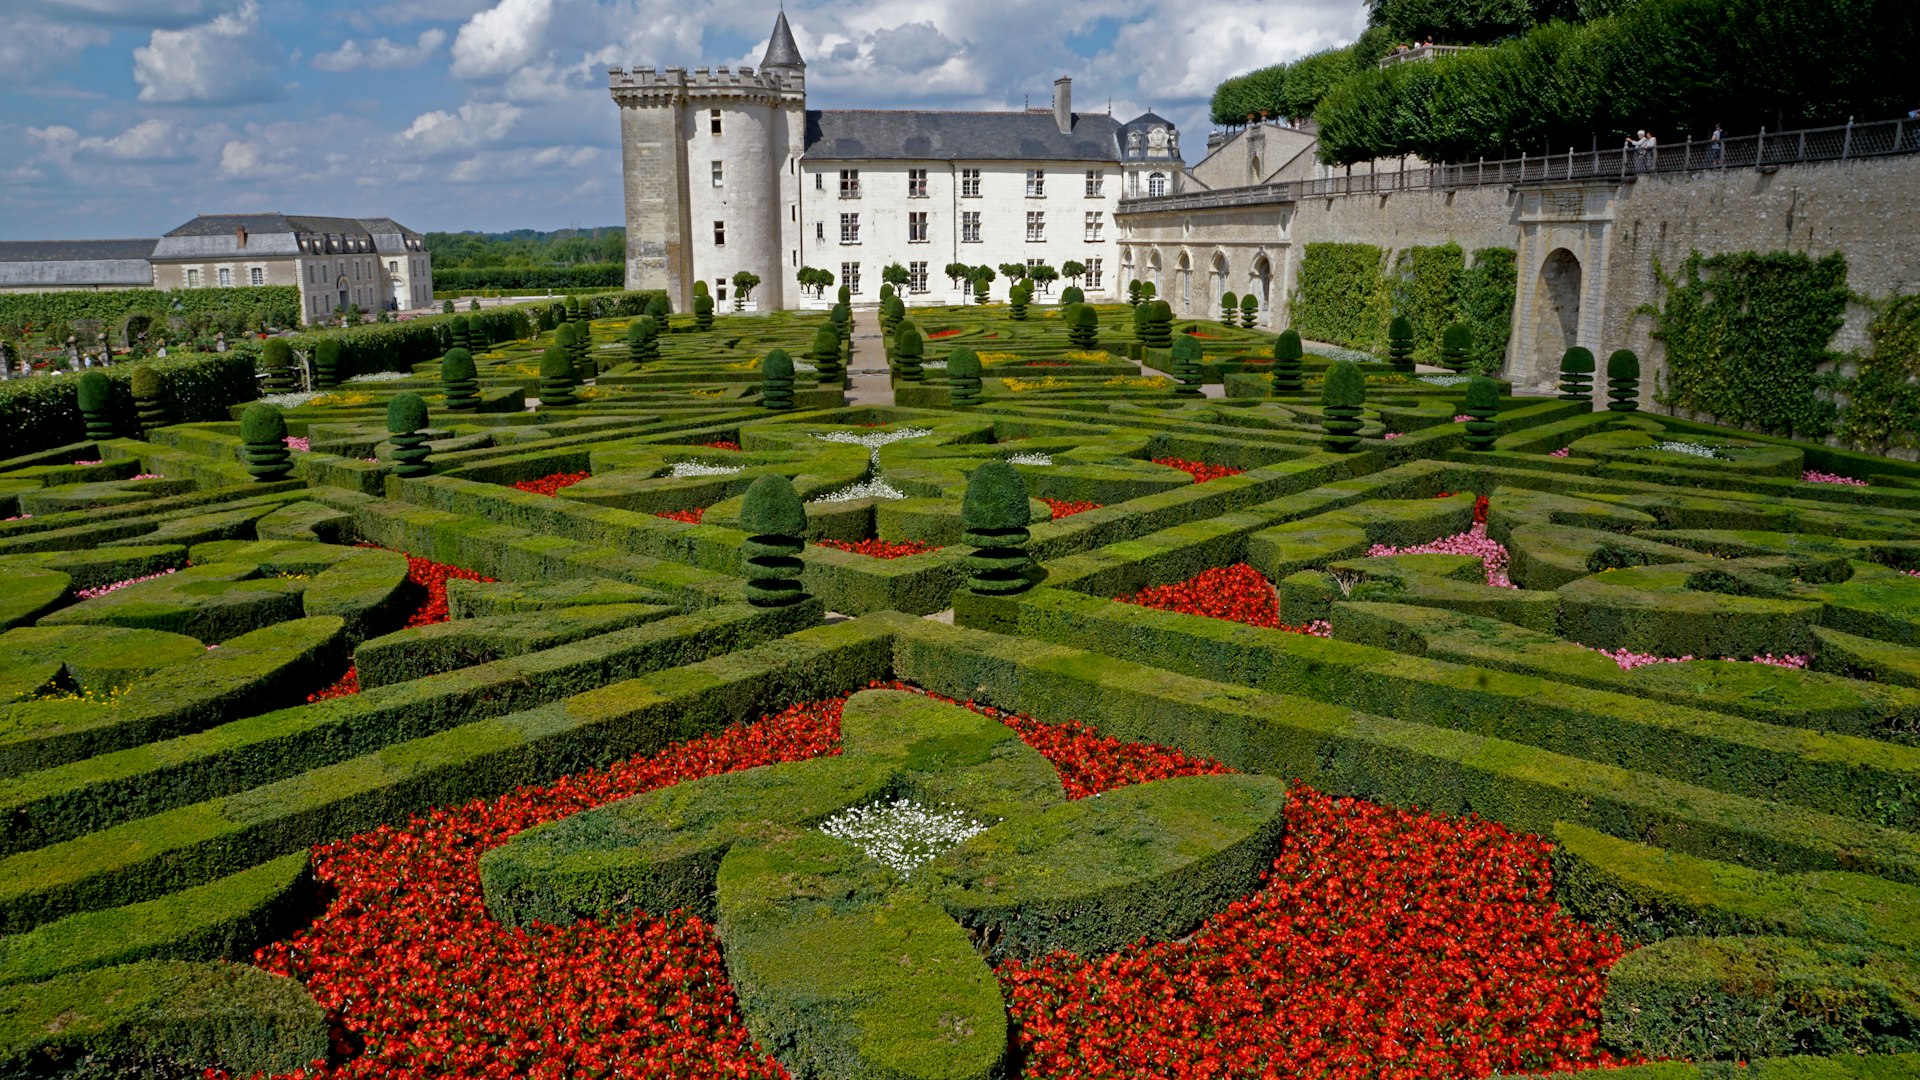 Hedge work in the gardens of Château de Villandry